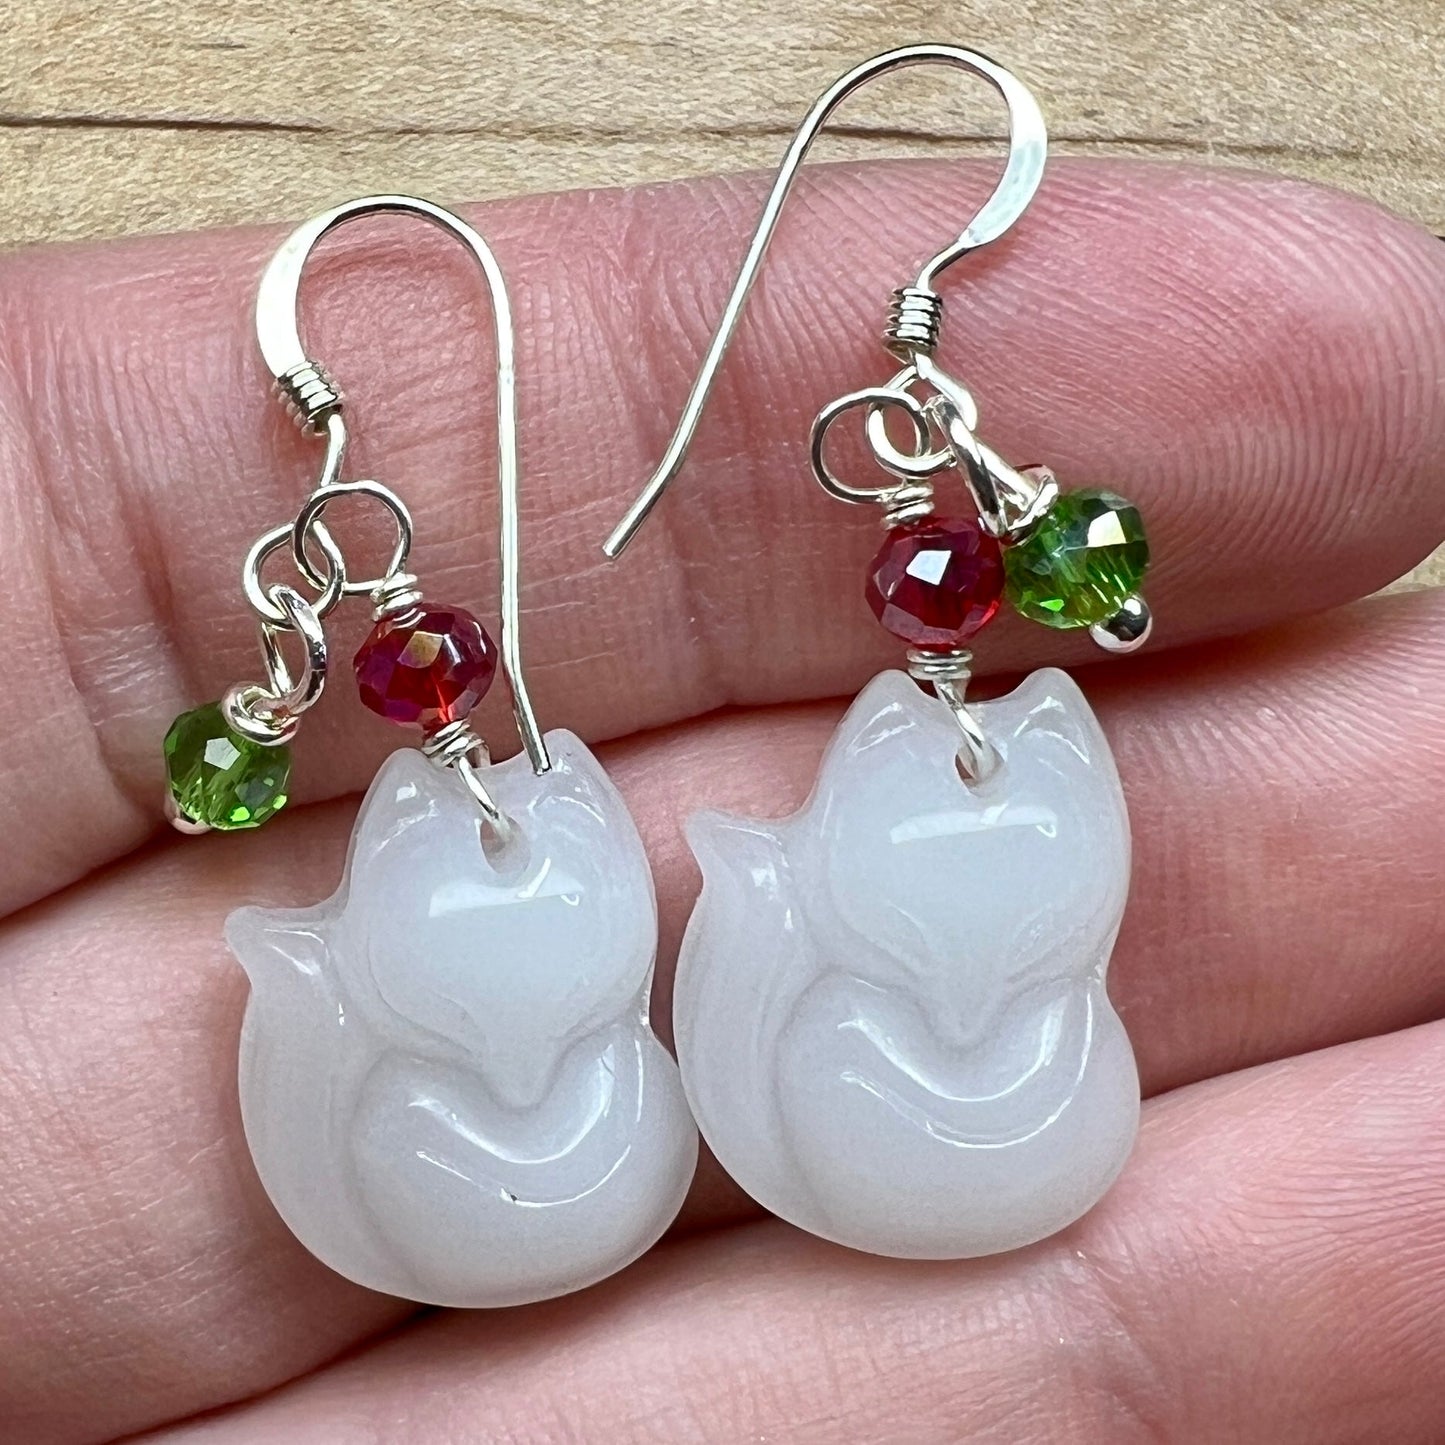 Yuletide Kitsune earrings